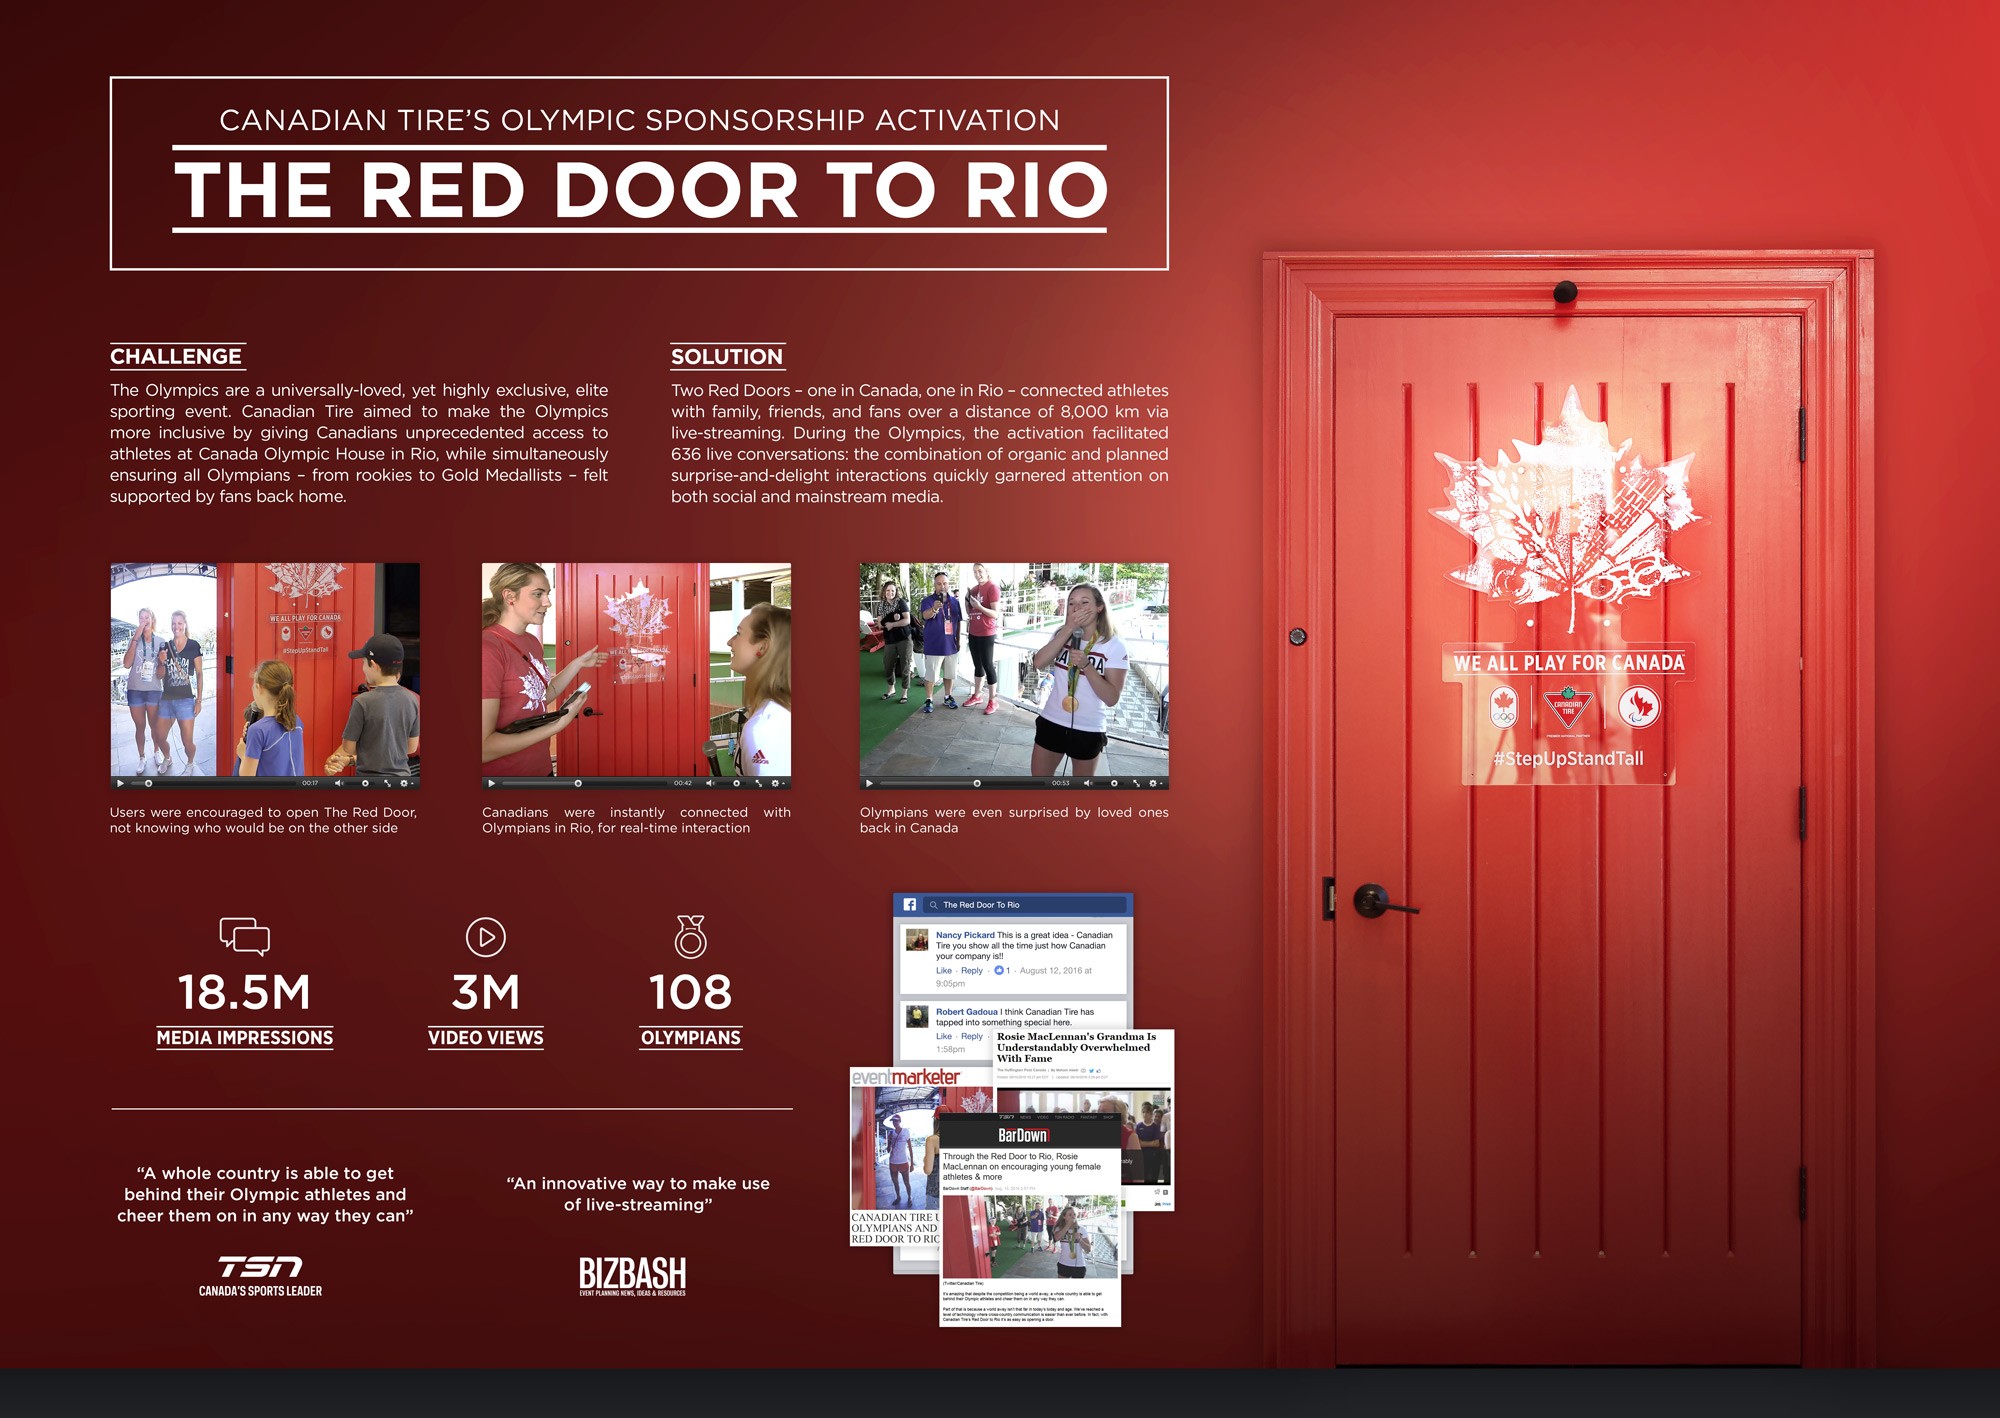 The Red Door to Rio